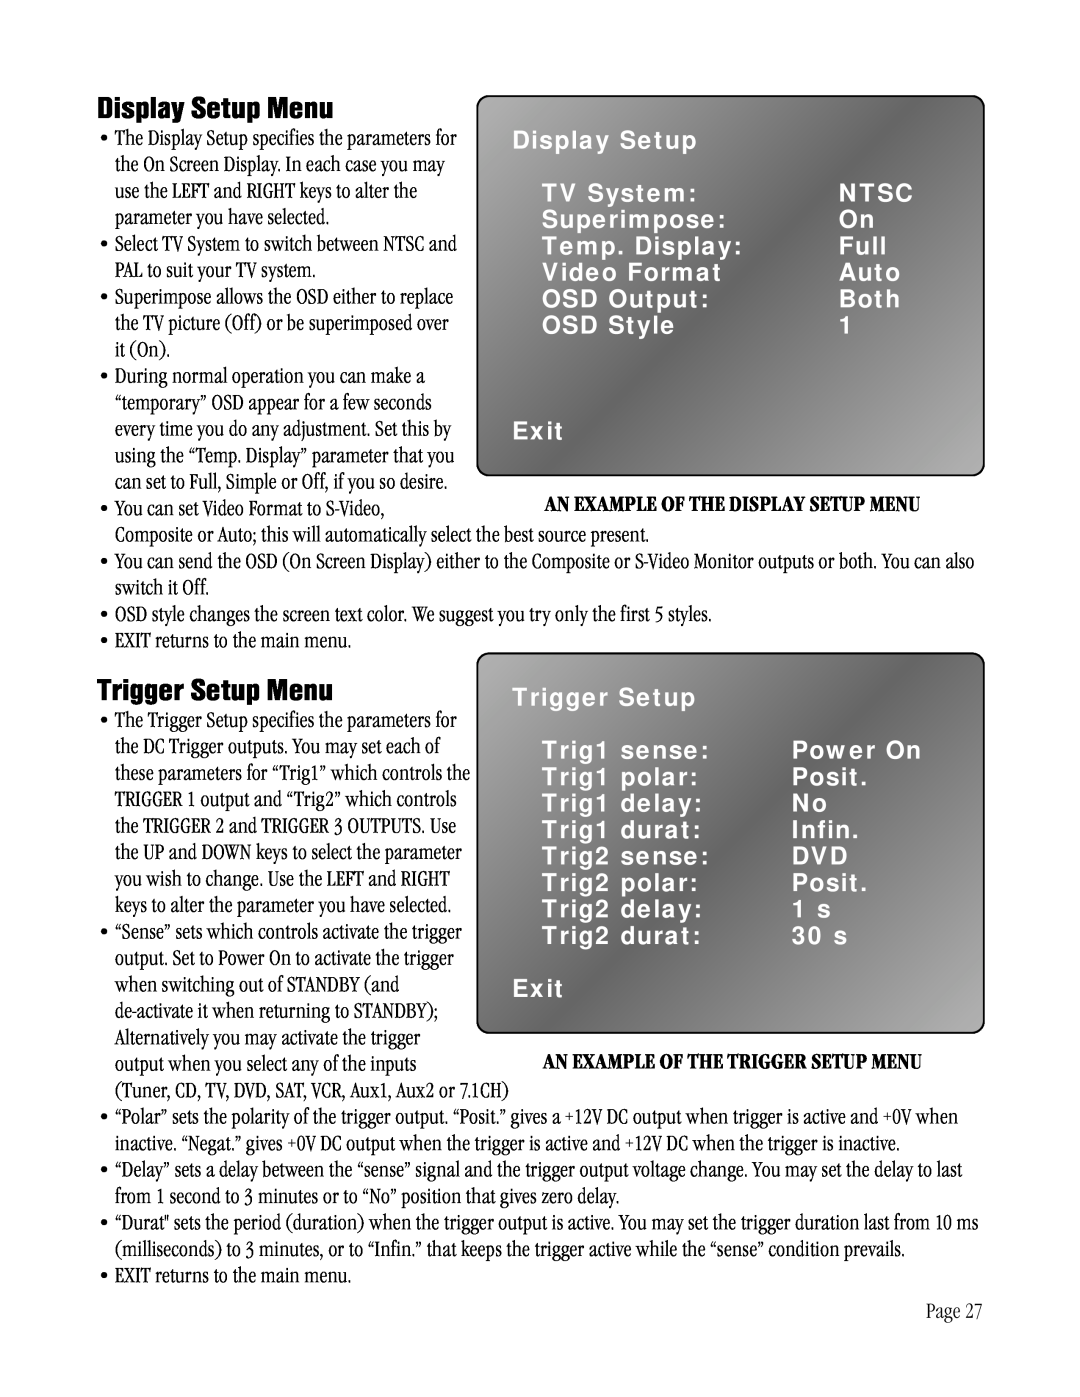 ATI Technologies ATP 8500 manual Display Setup Menu, Trigger Setup Menu 